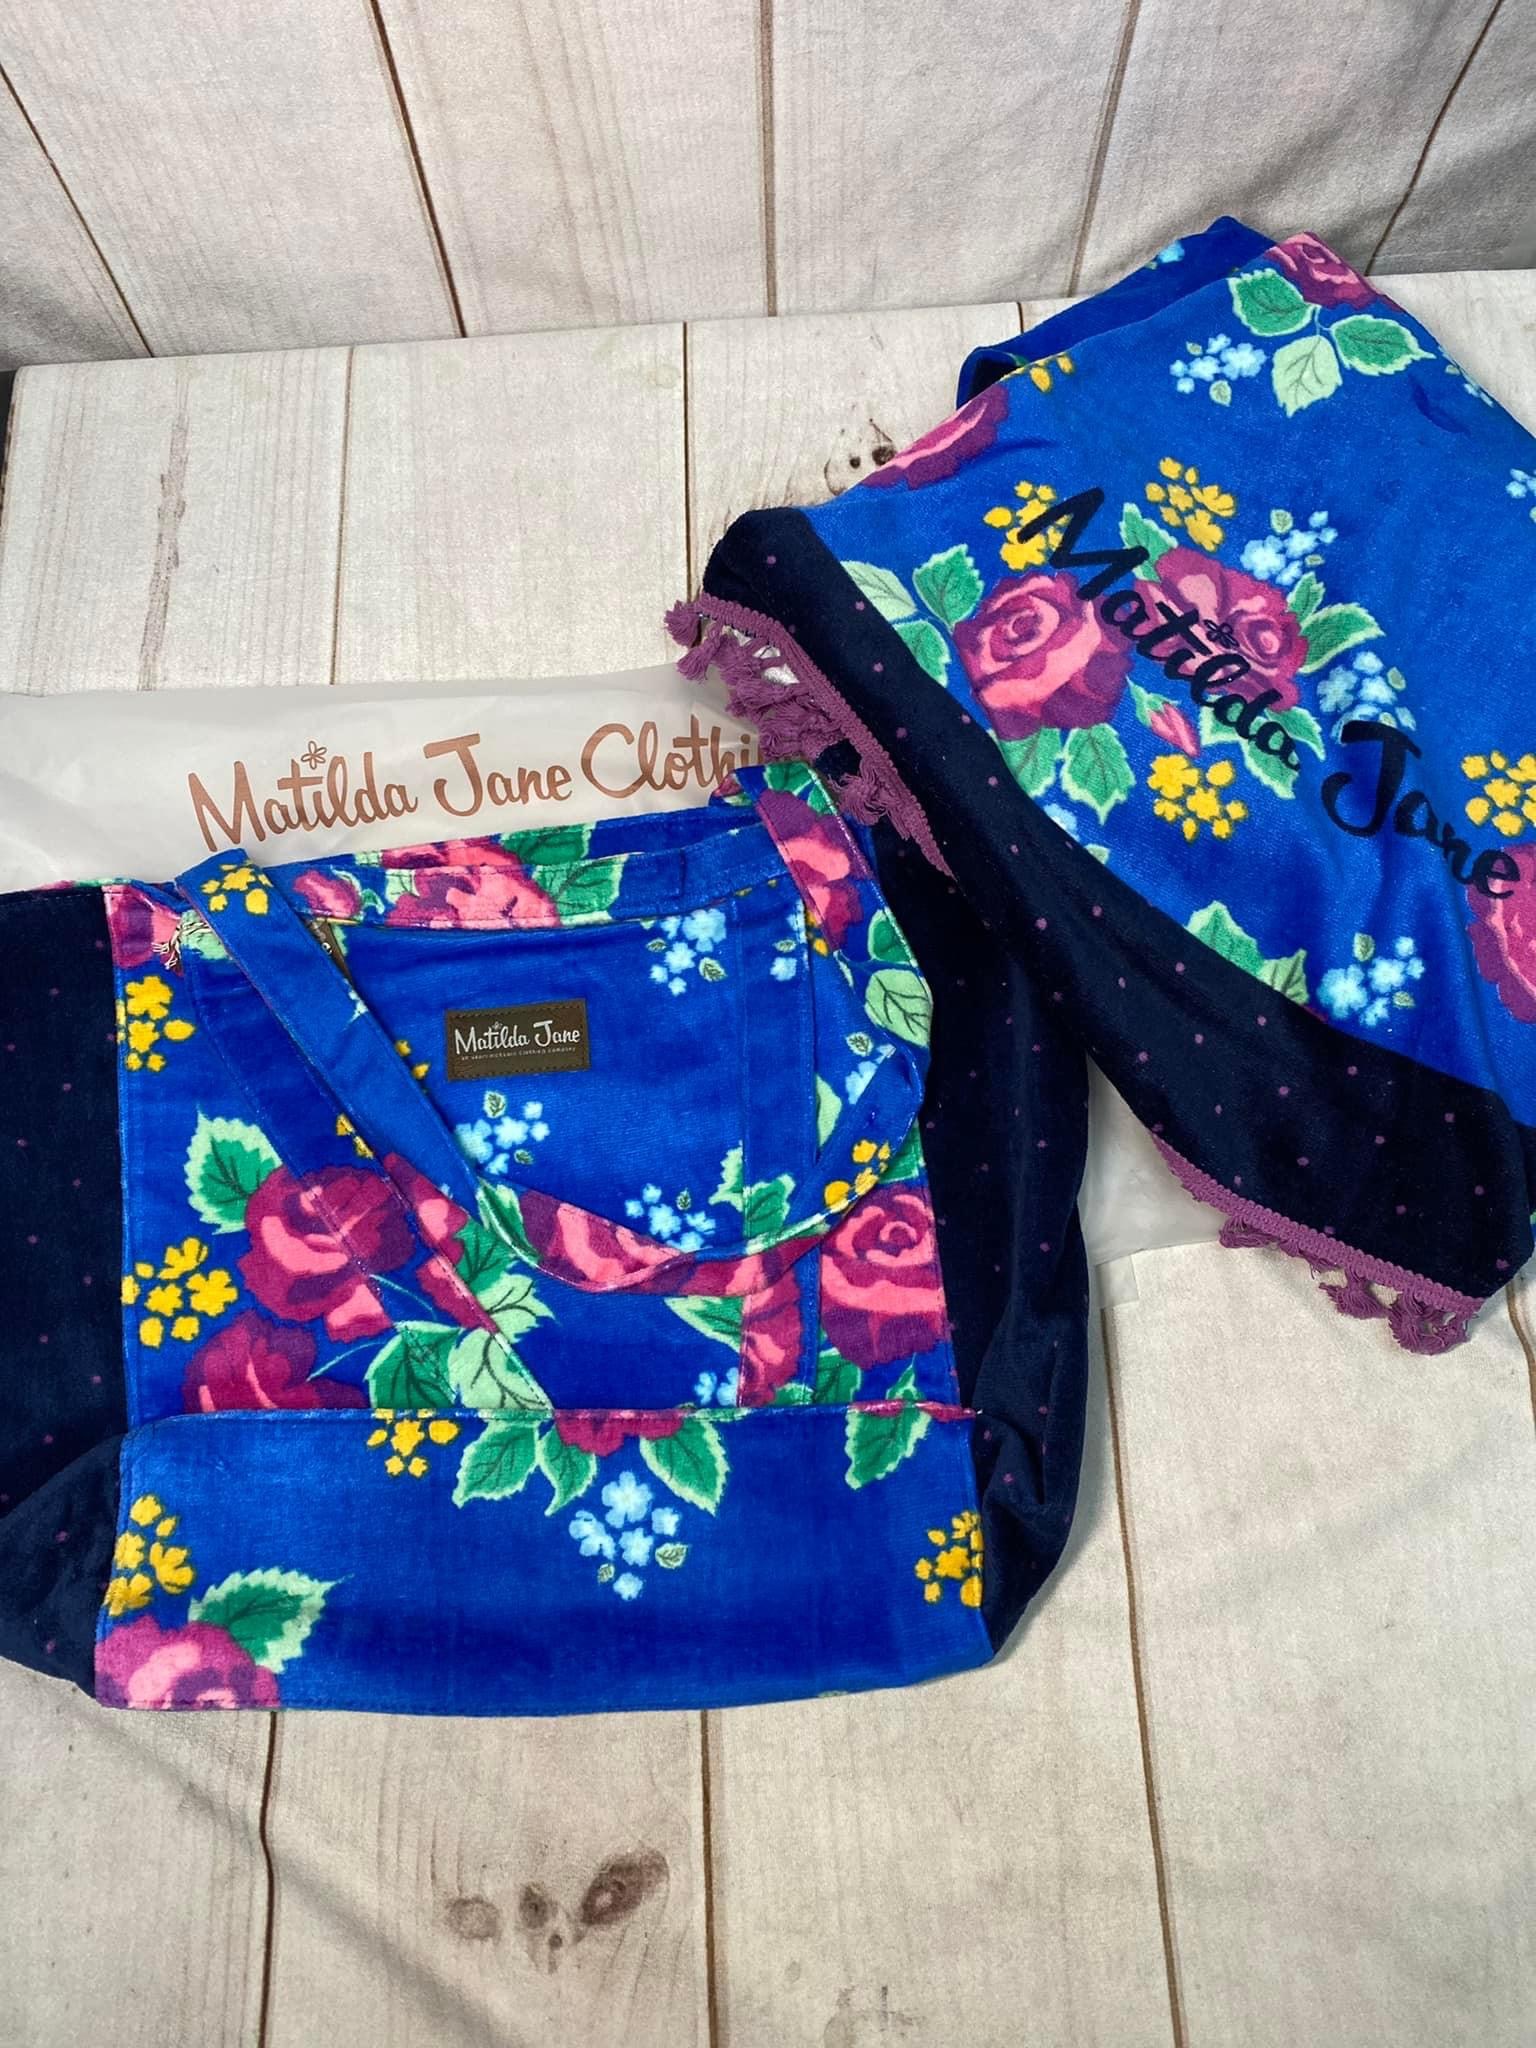 Matilda Jane Toe & Towel Set - New!
Sweet Sunshine Round Towel & Tote
Terry Cloth